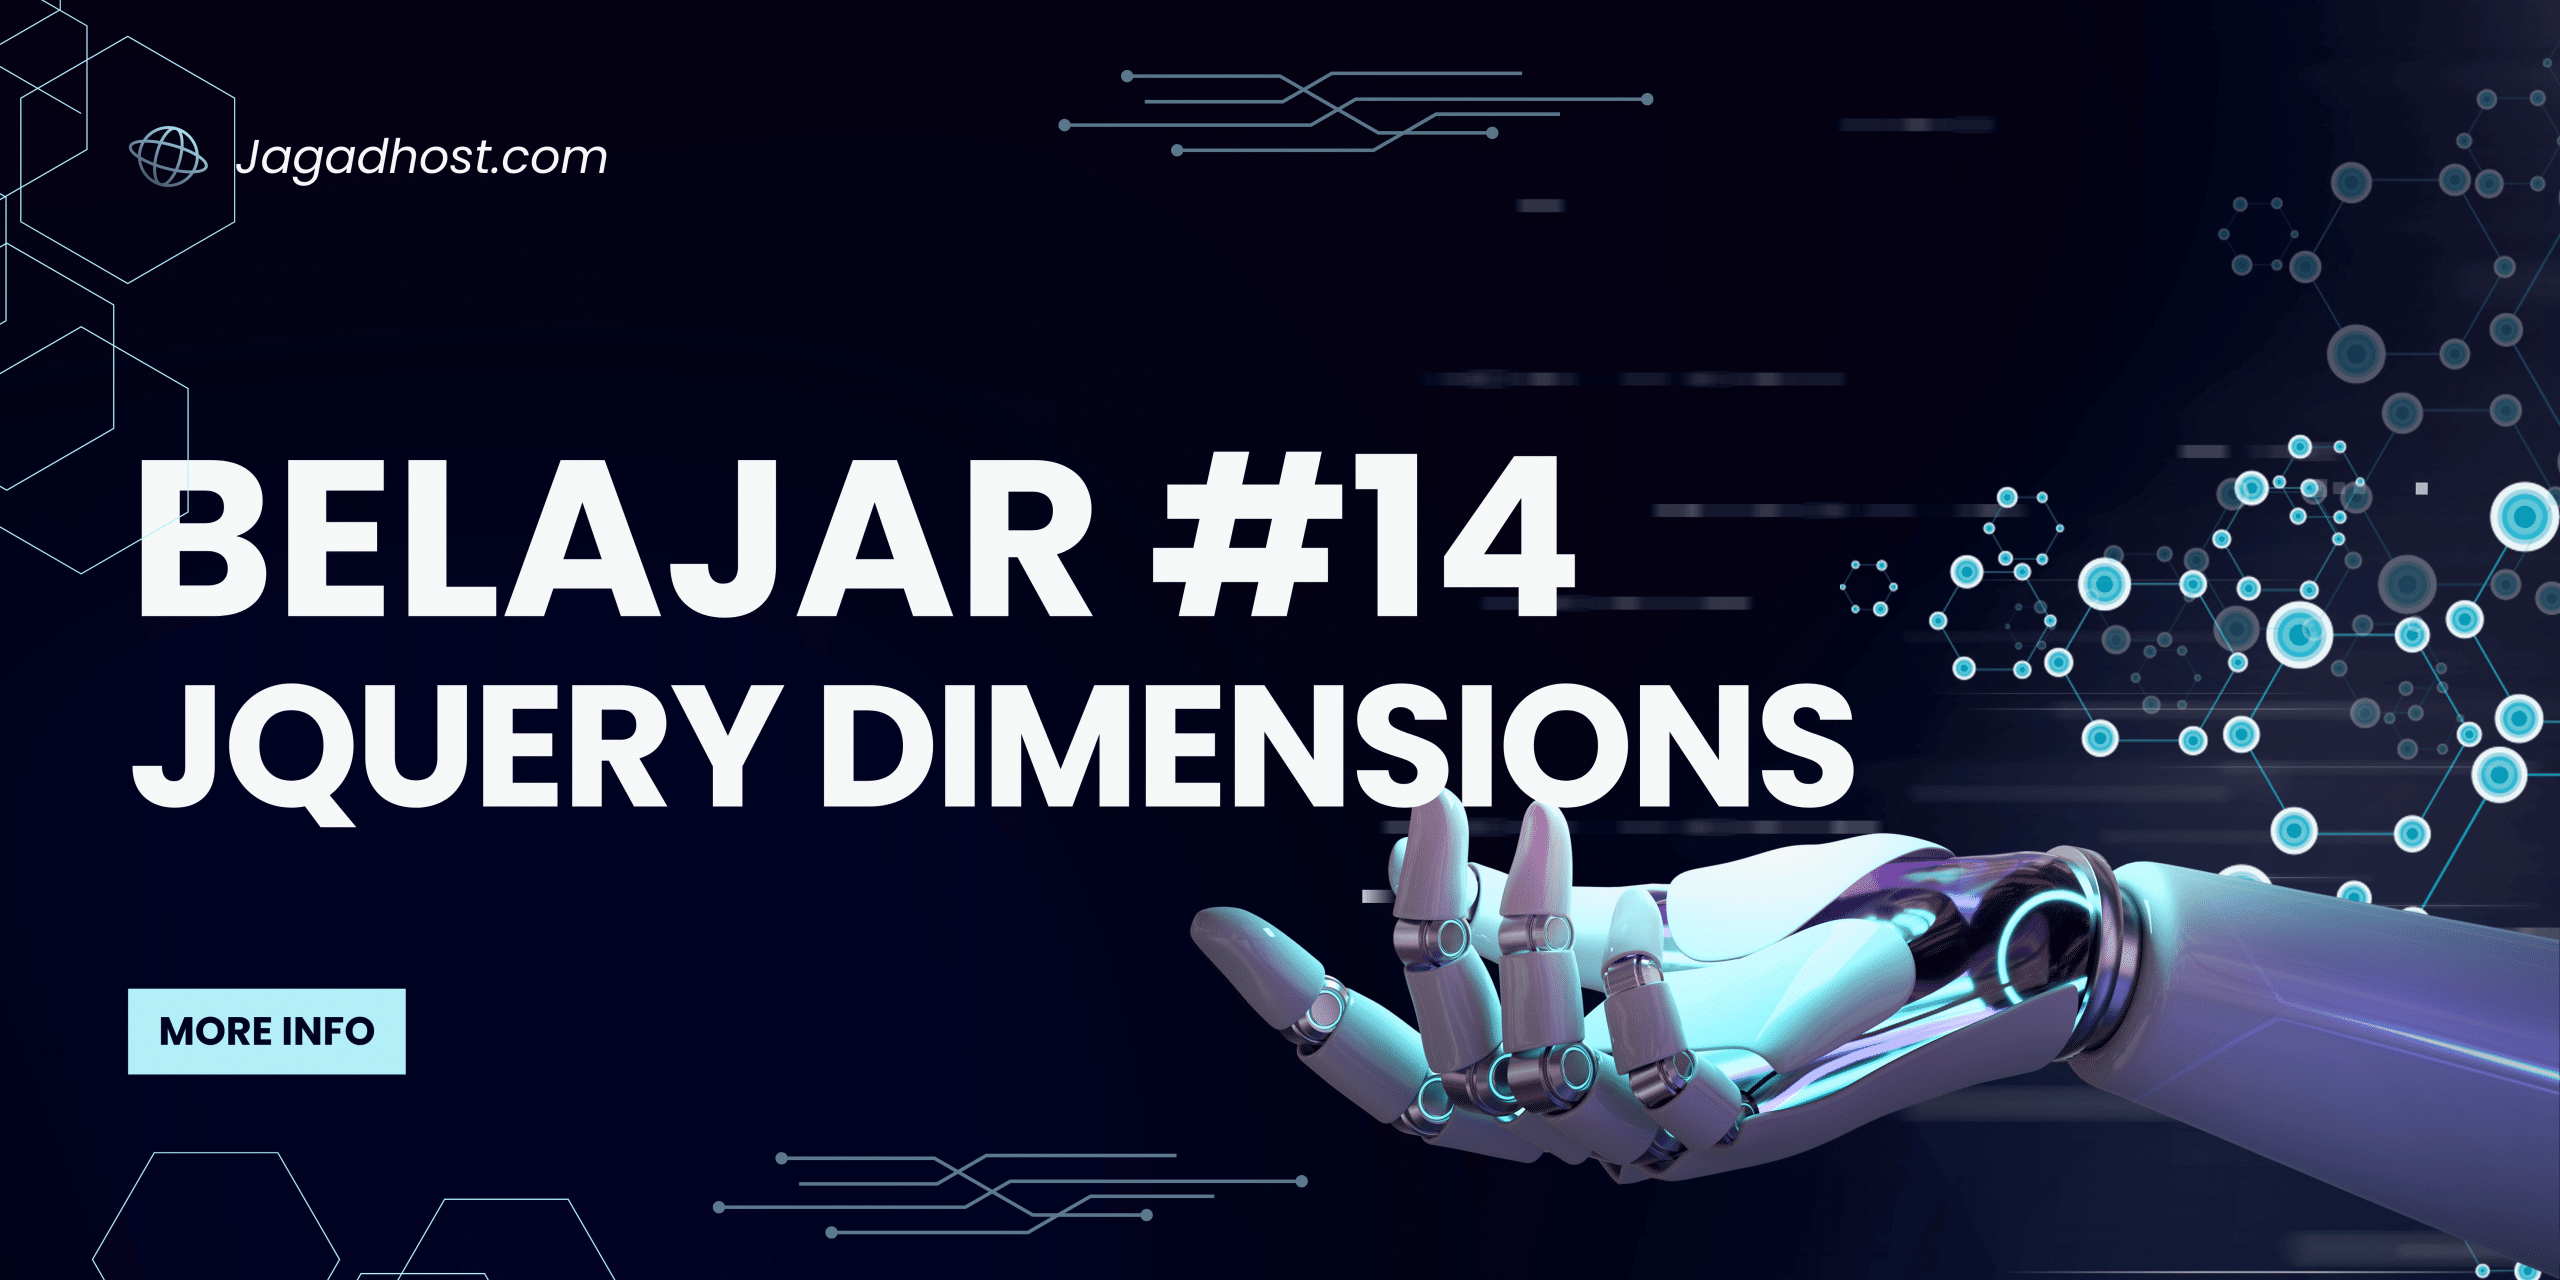 jQuery Dimensions